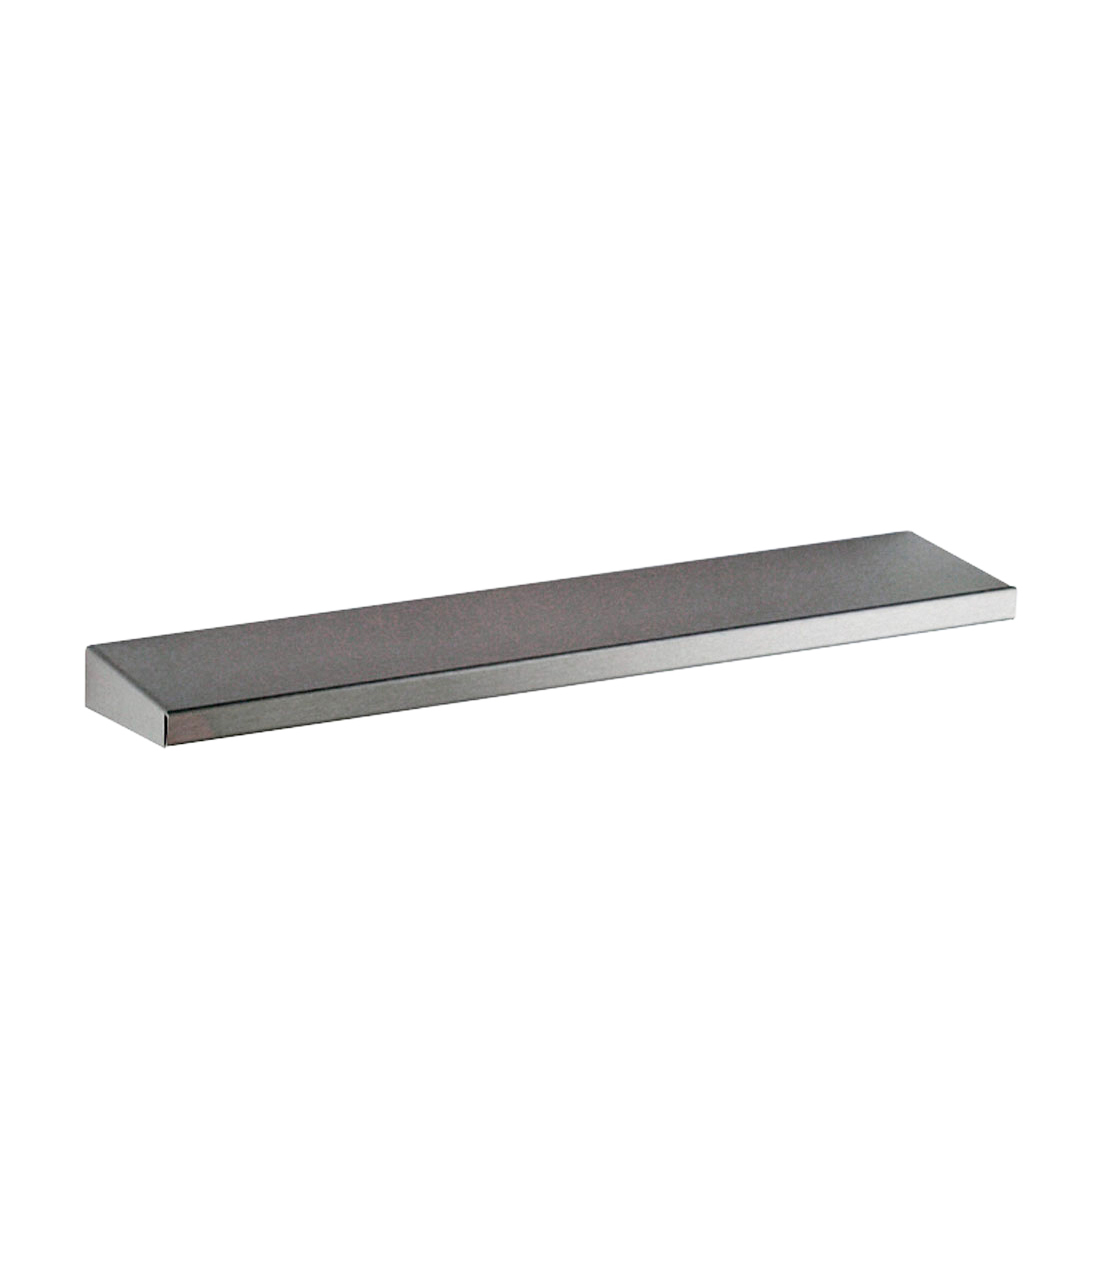 Stainless Steel Mirror Shelf - (Model #: ms-18) Image